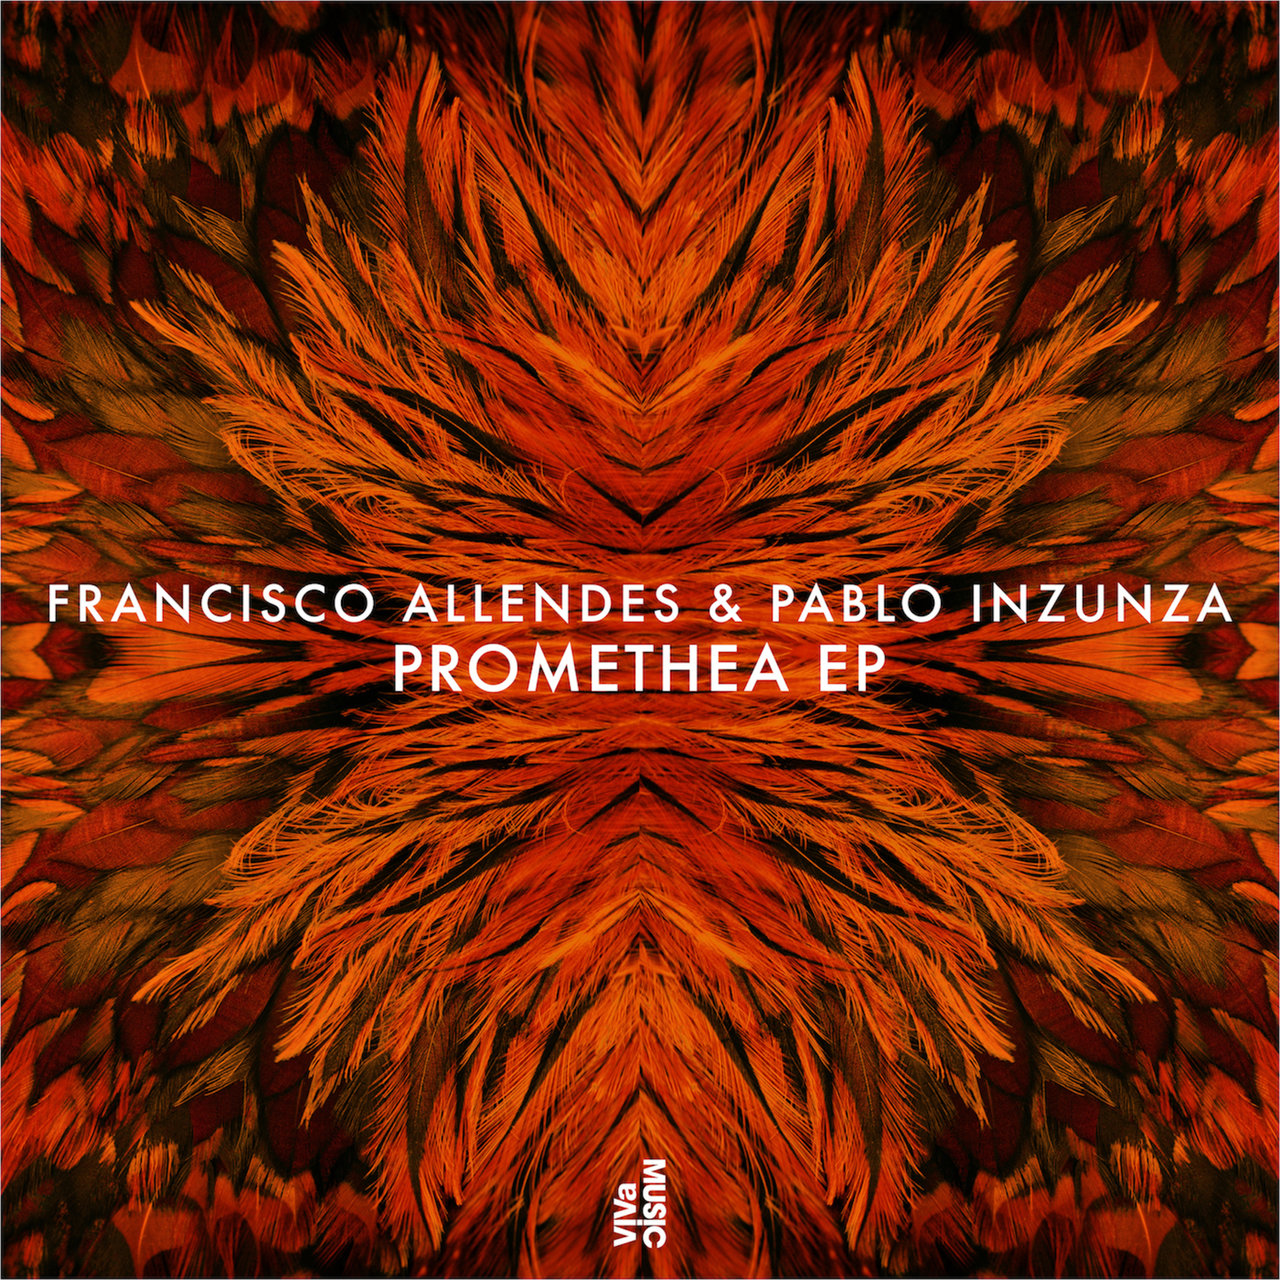 Francisco Allendes & Pablo Inzunza - Promethea EP / VIVa MUSiC